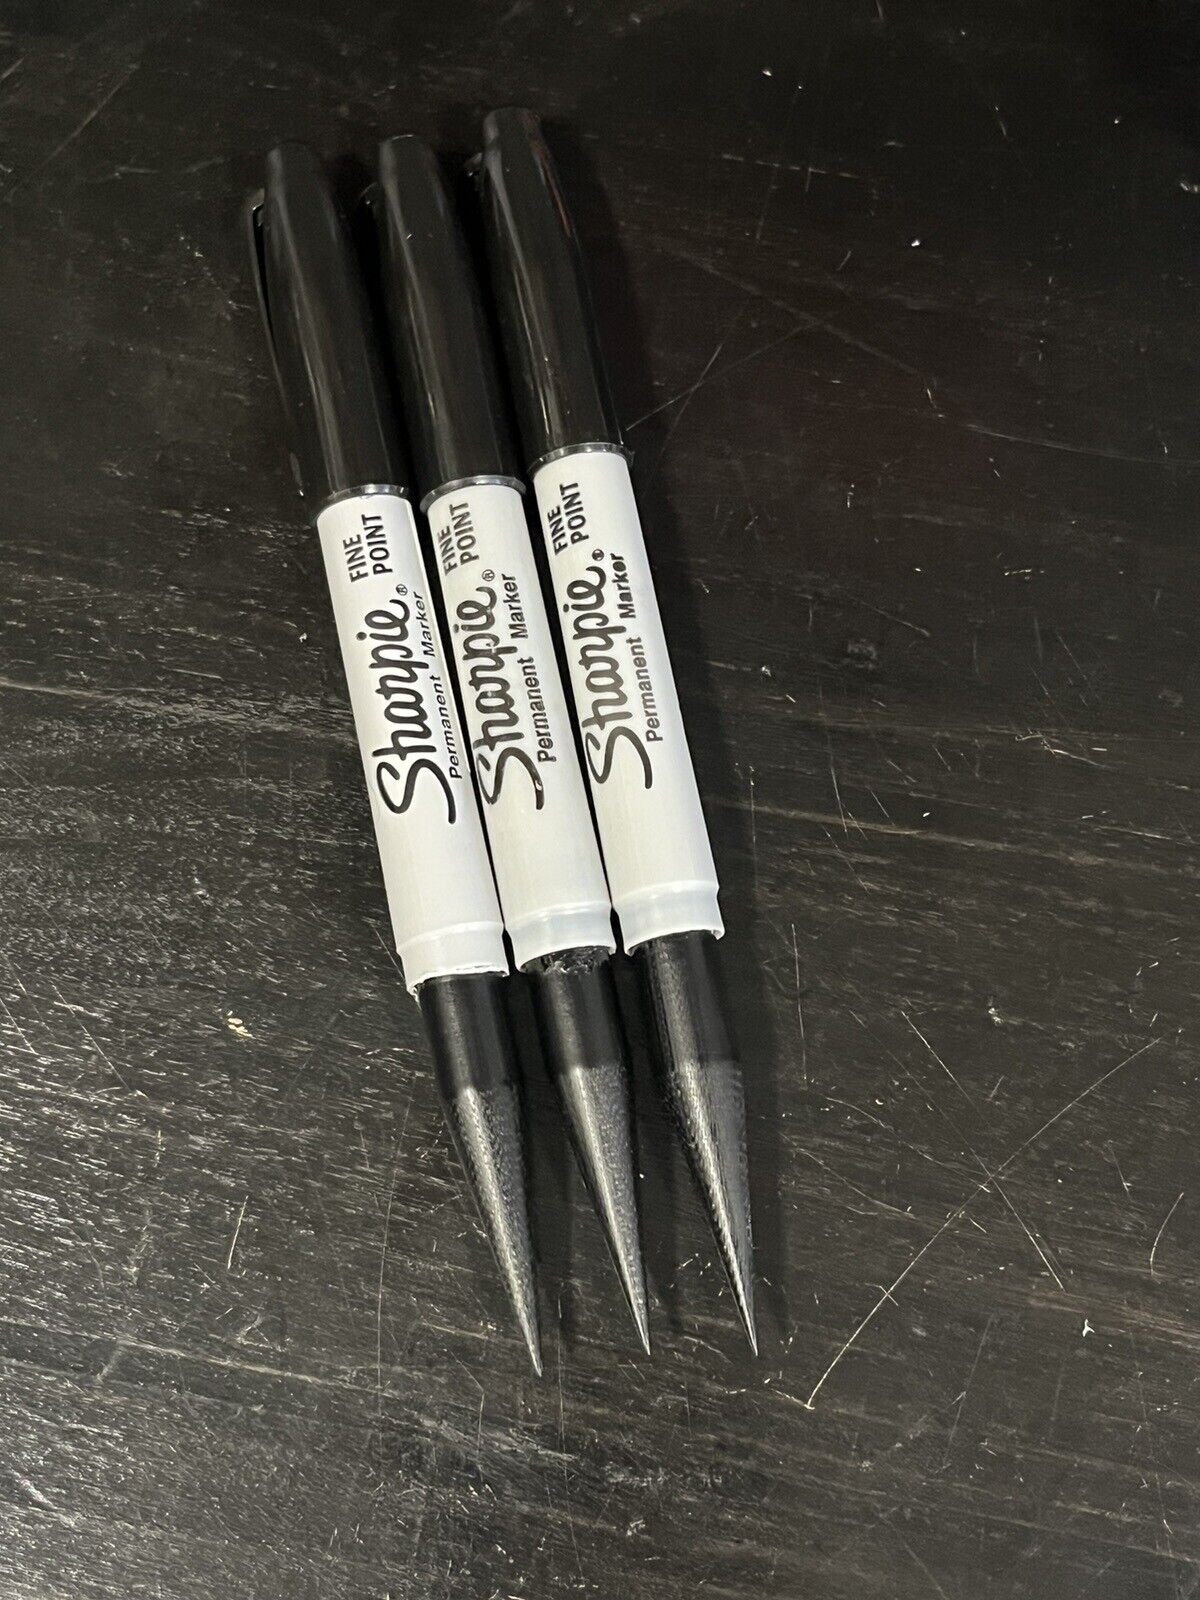 3/8” Black G10 Marlin Spike, Knotting Tool, EDC Spike, NPE, G10 Pen, G10 Marker